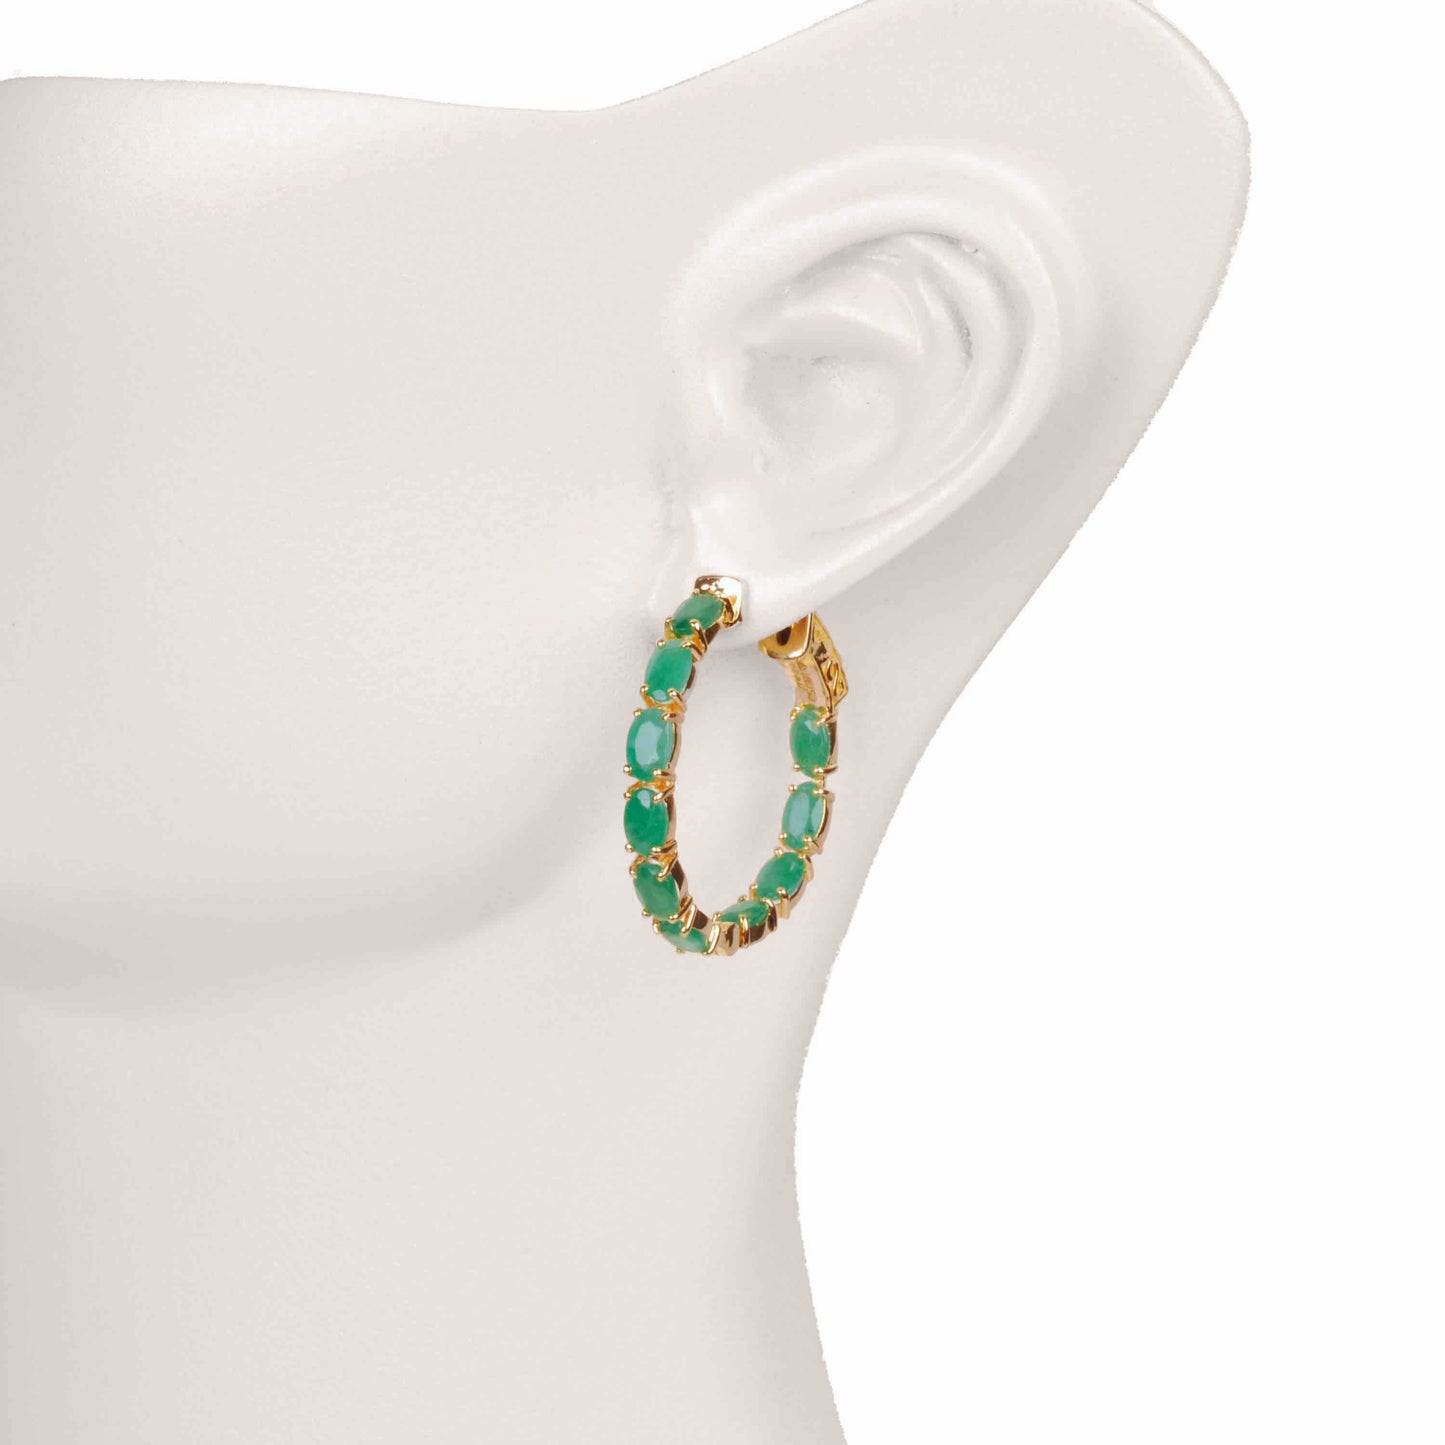 Classic emerald jewelry